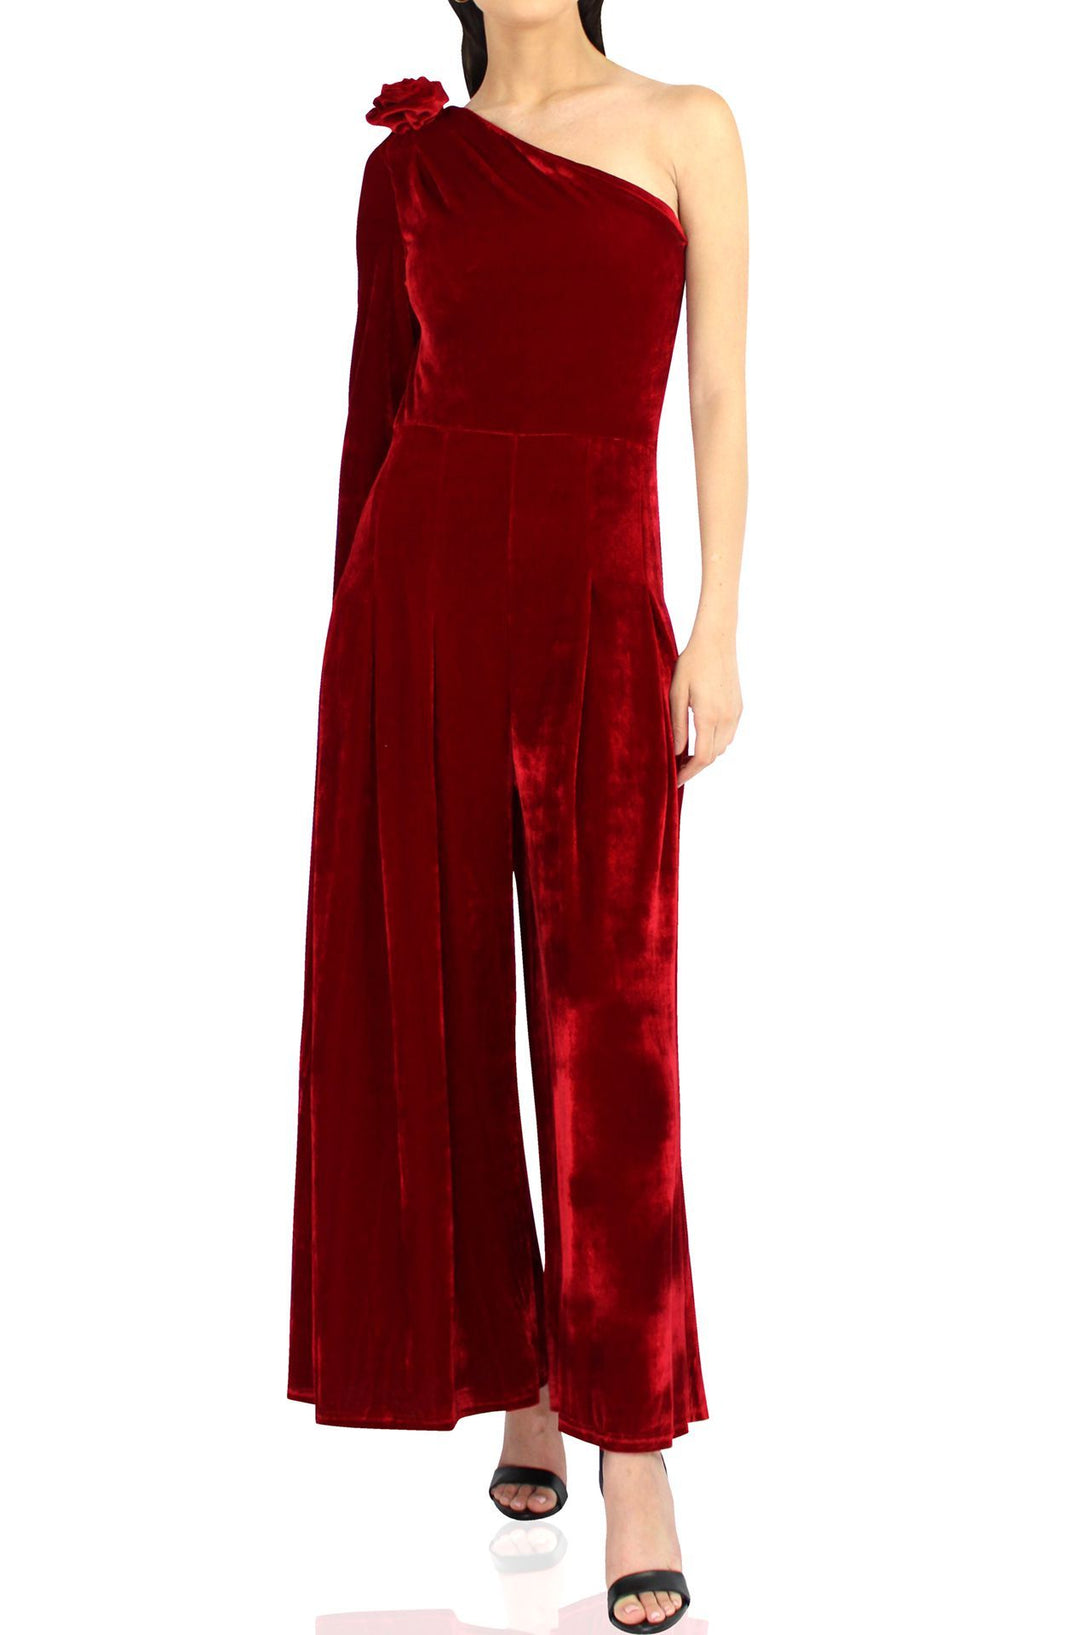 Women-Designer-One-Shoulder-Long-Dress-In-Red-By-Kyle